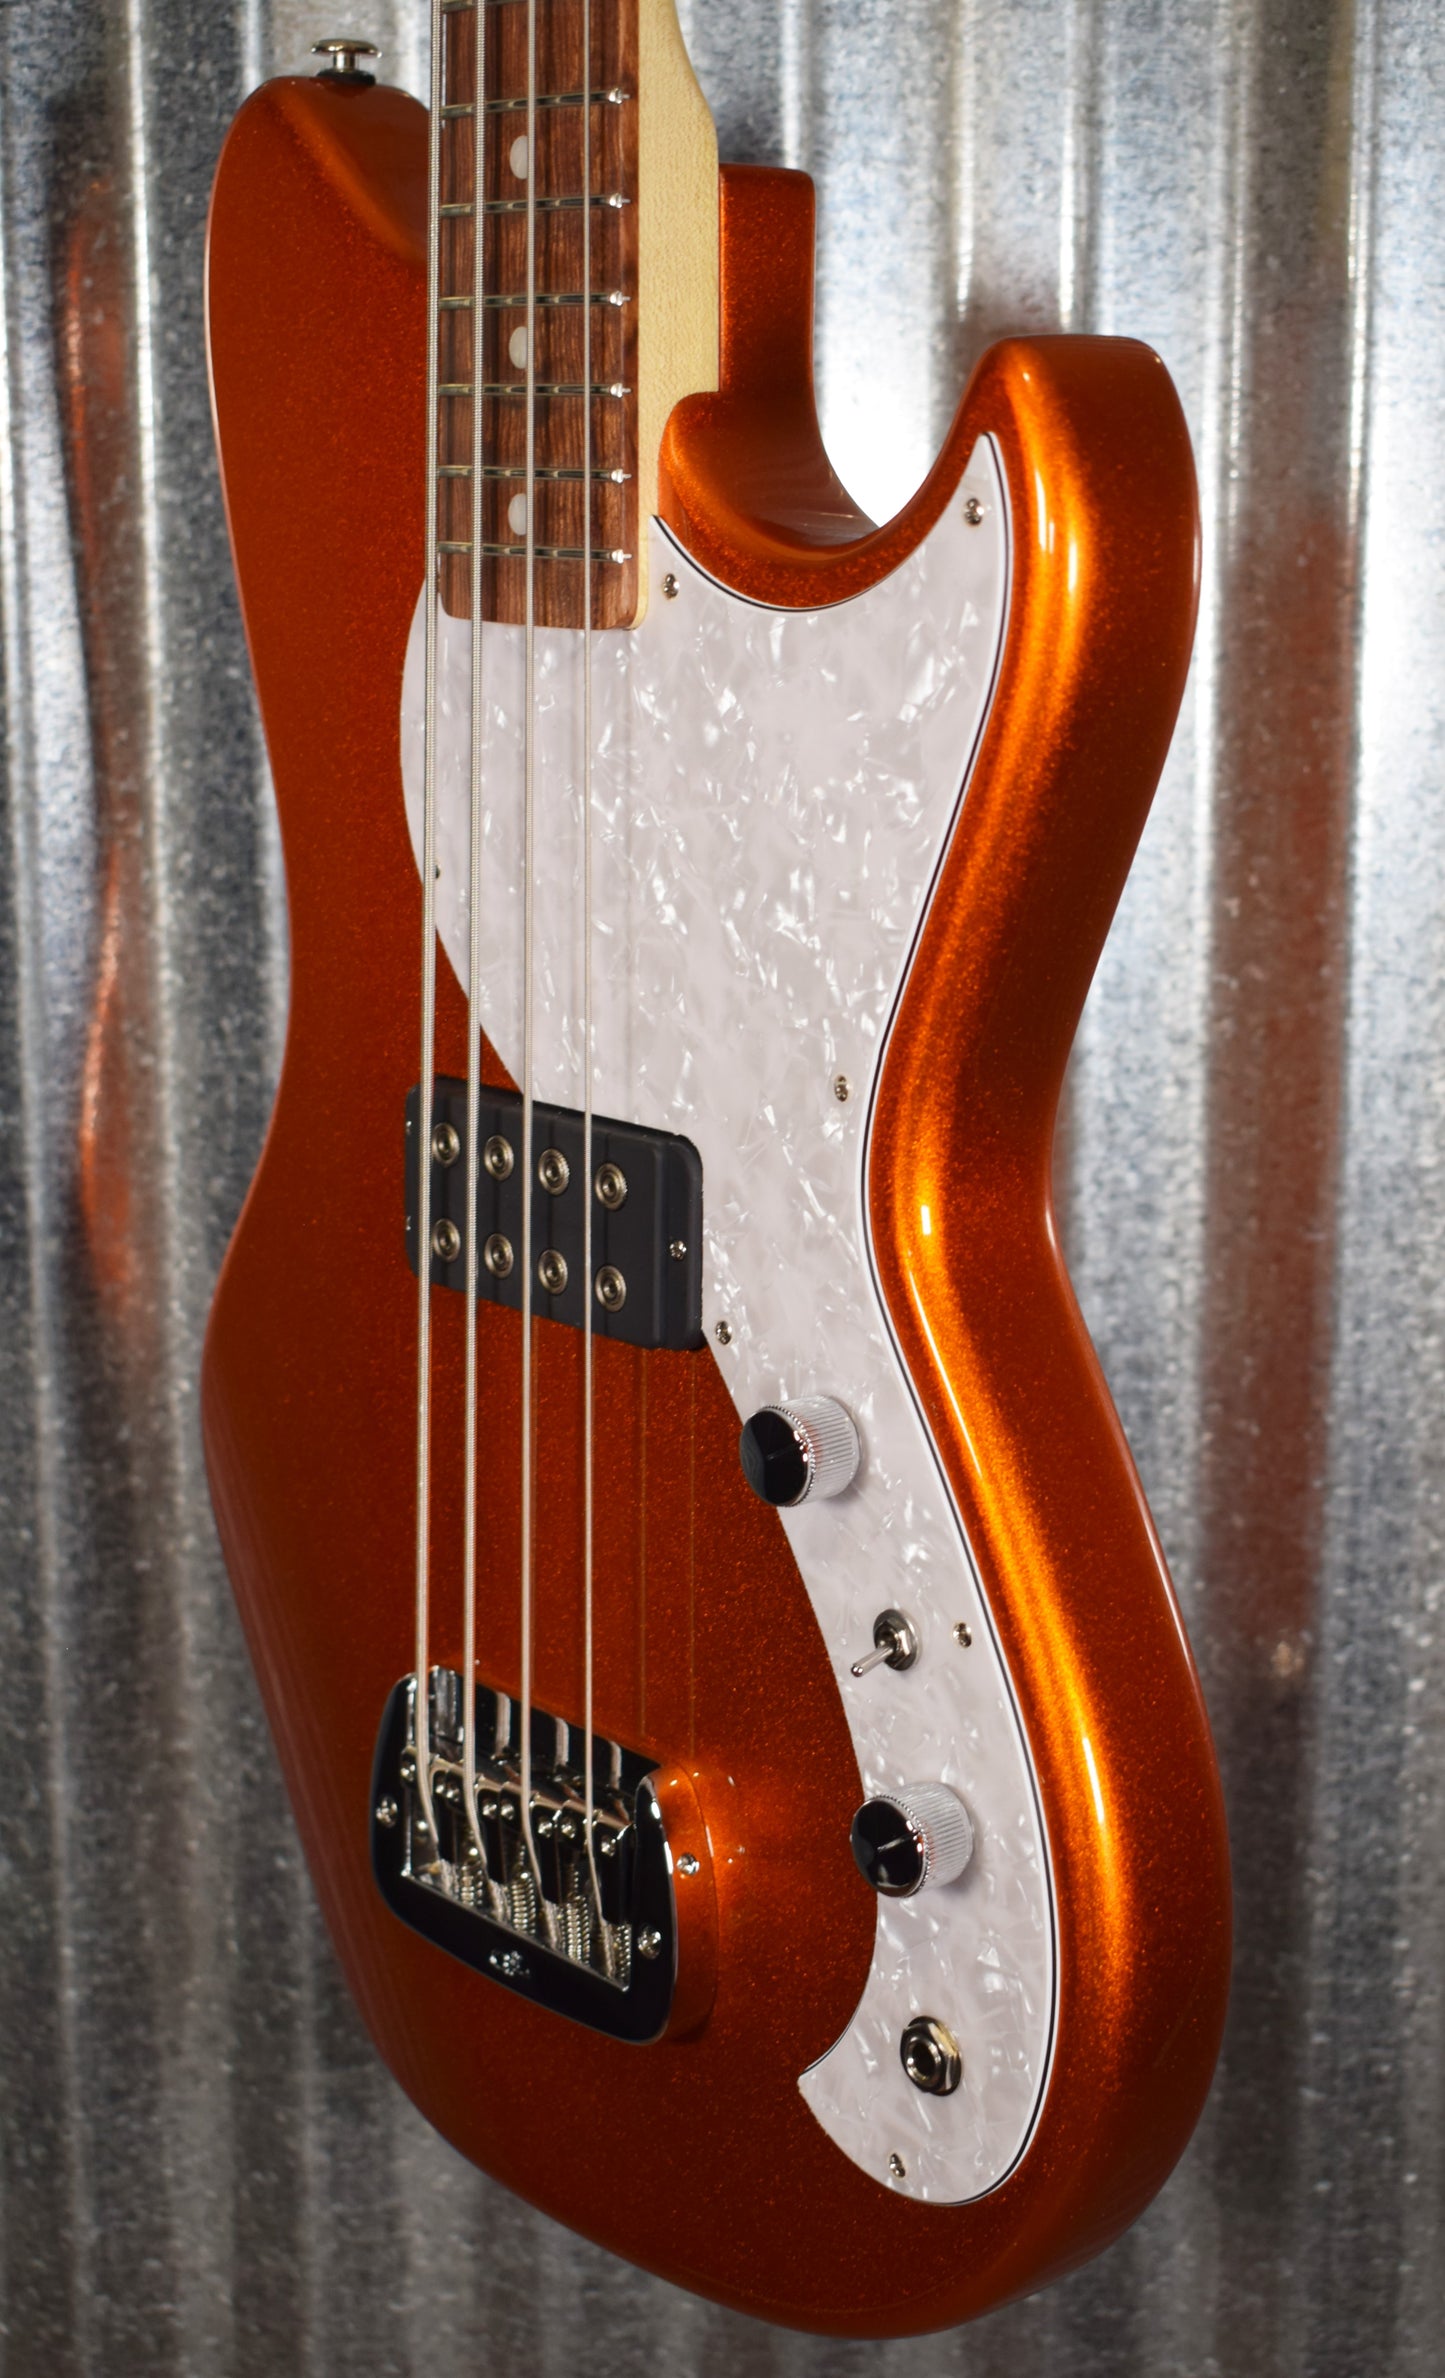 G&L USA Fullerton Deluxe Fallout 4 String Short Scale Bass Tangerine & Bag #5184